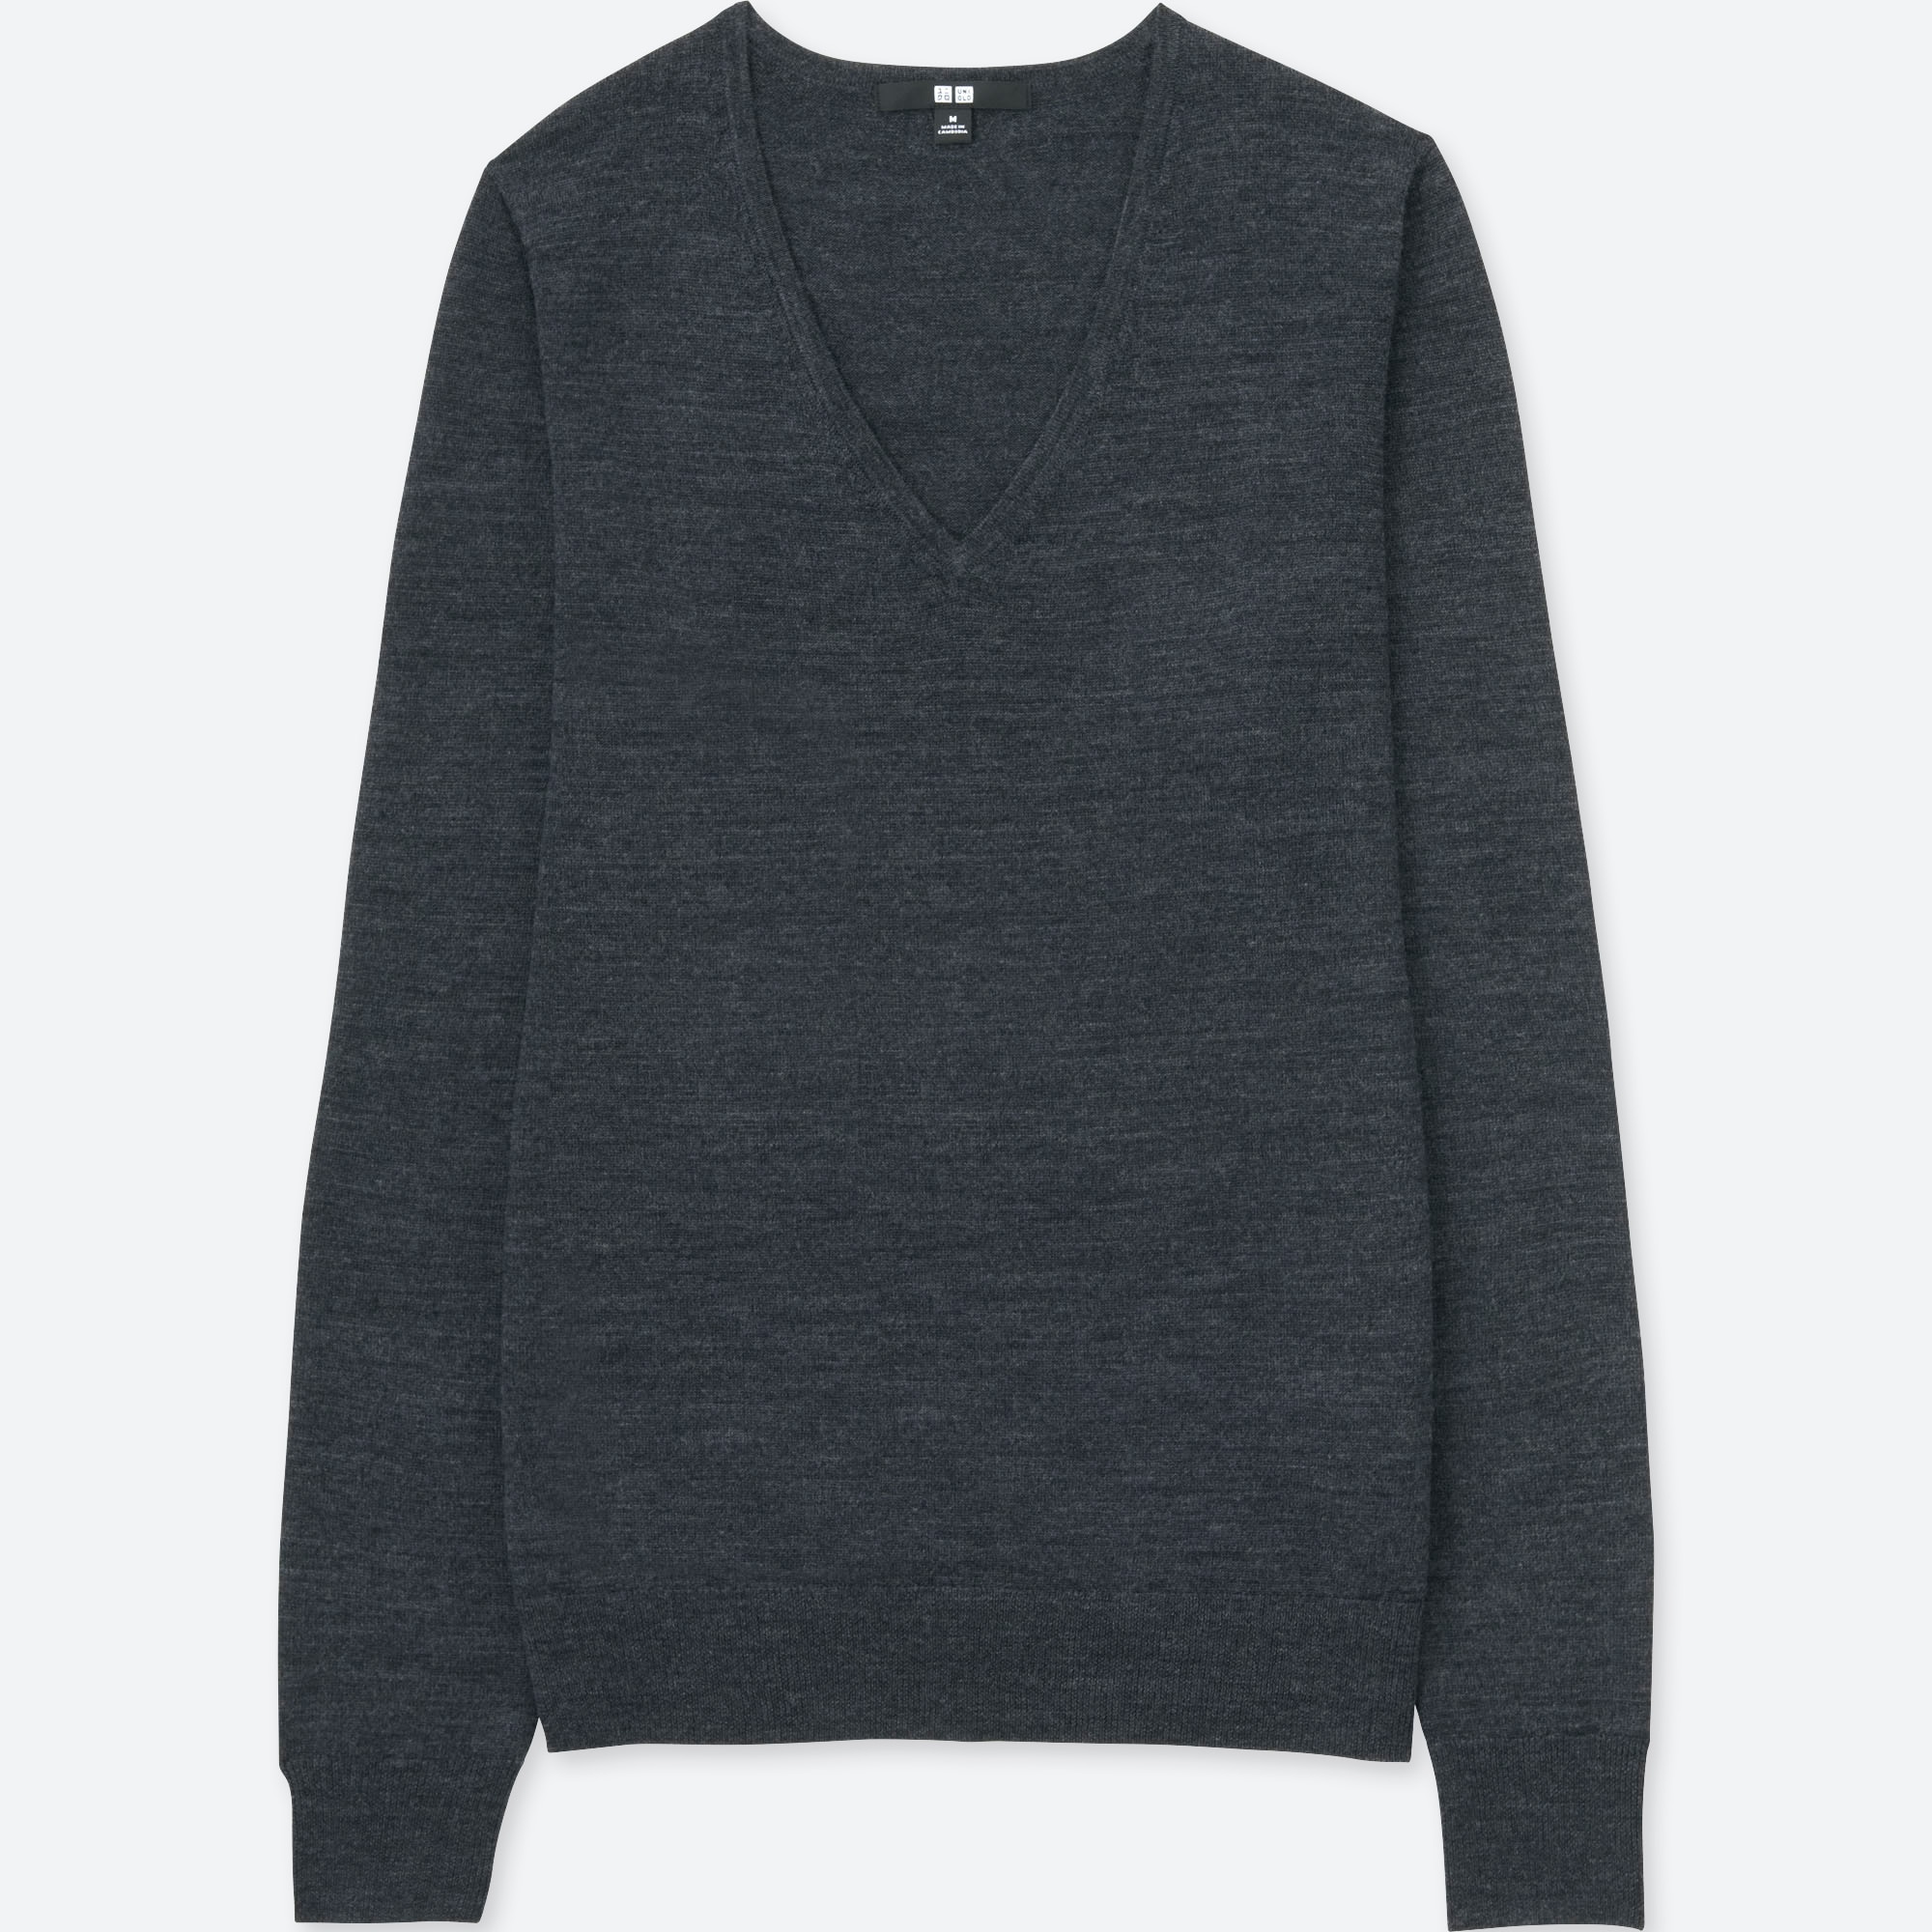 grey wool sweater womens